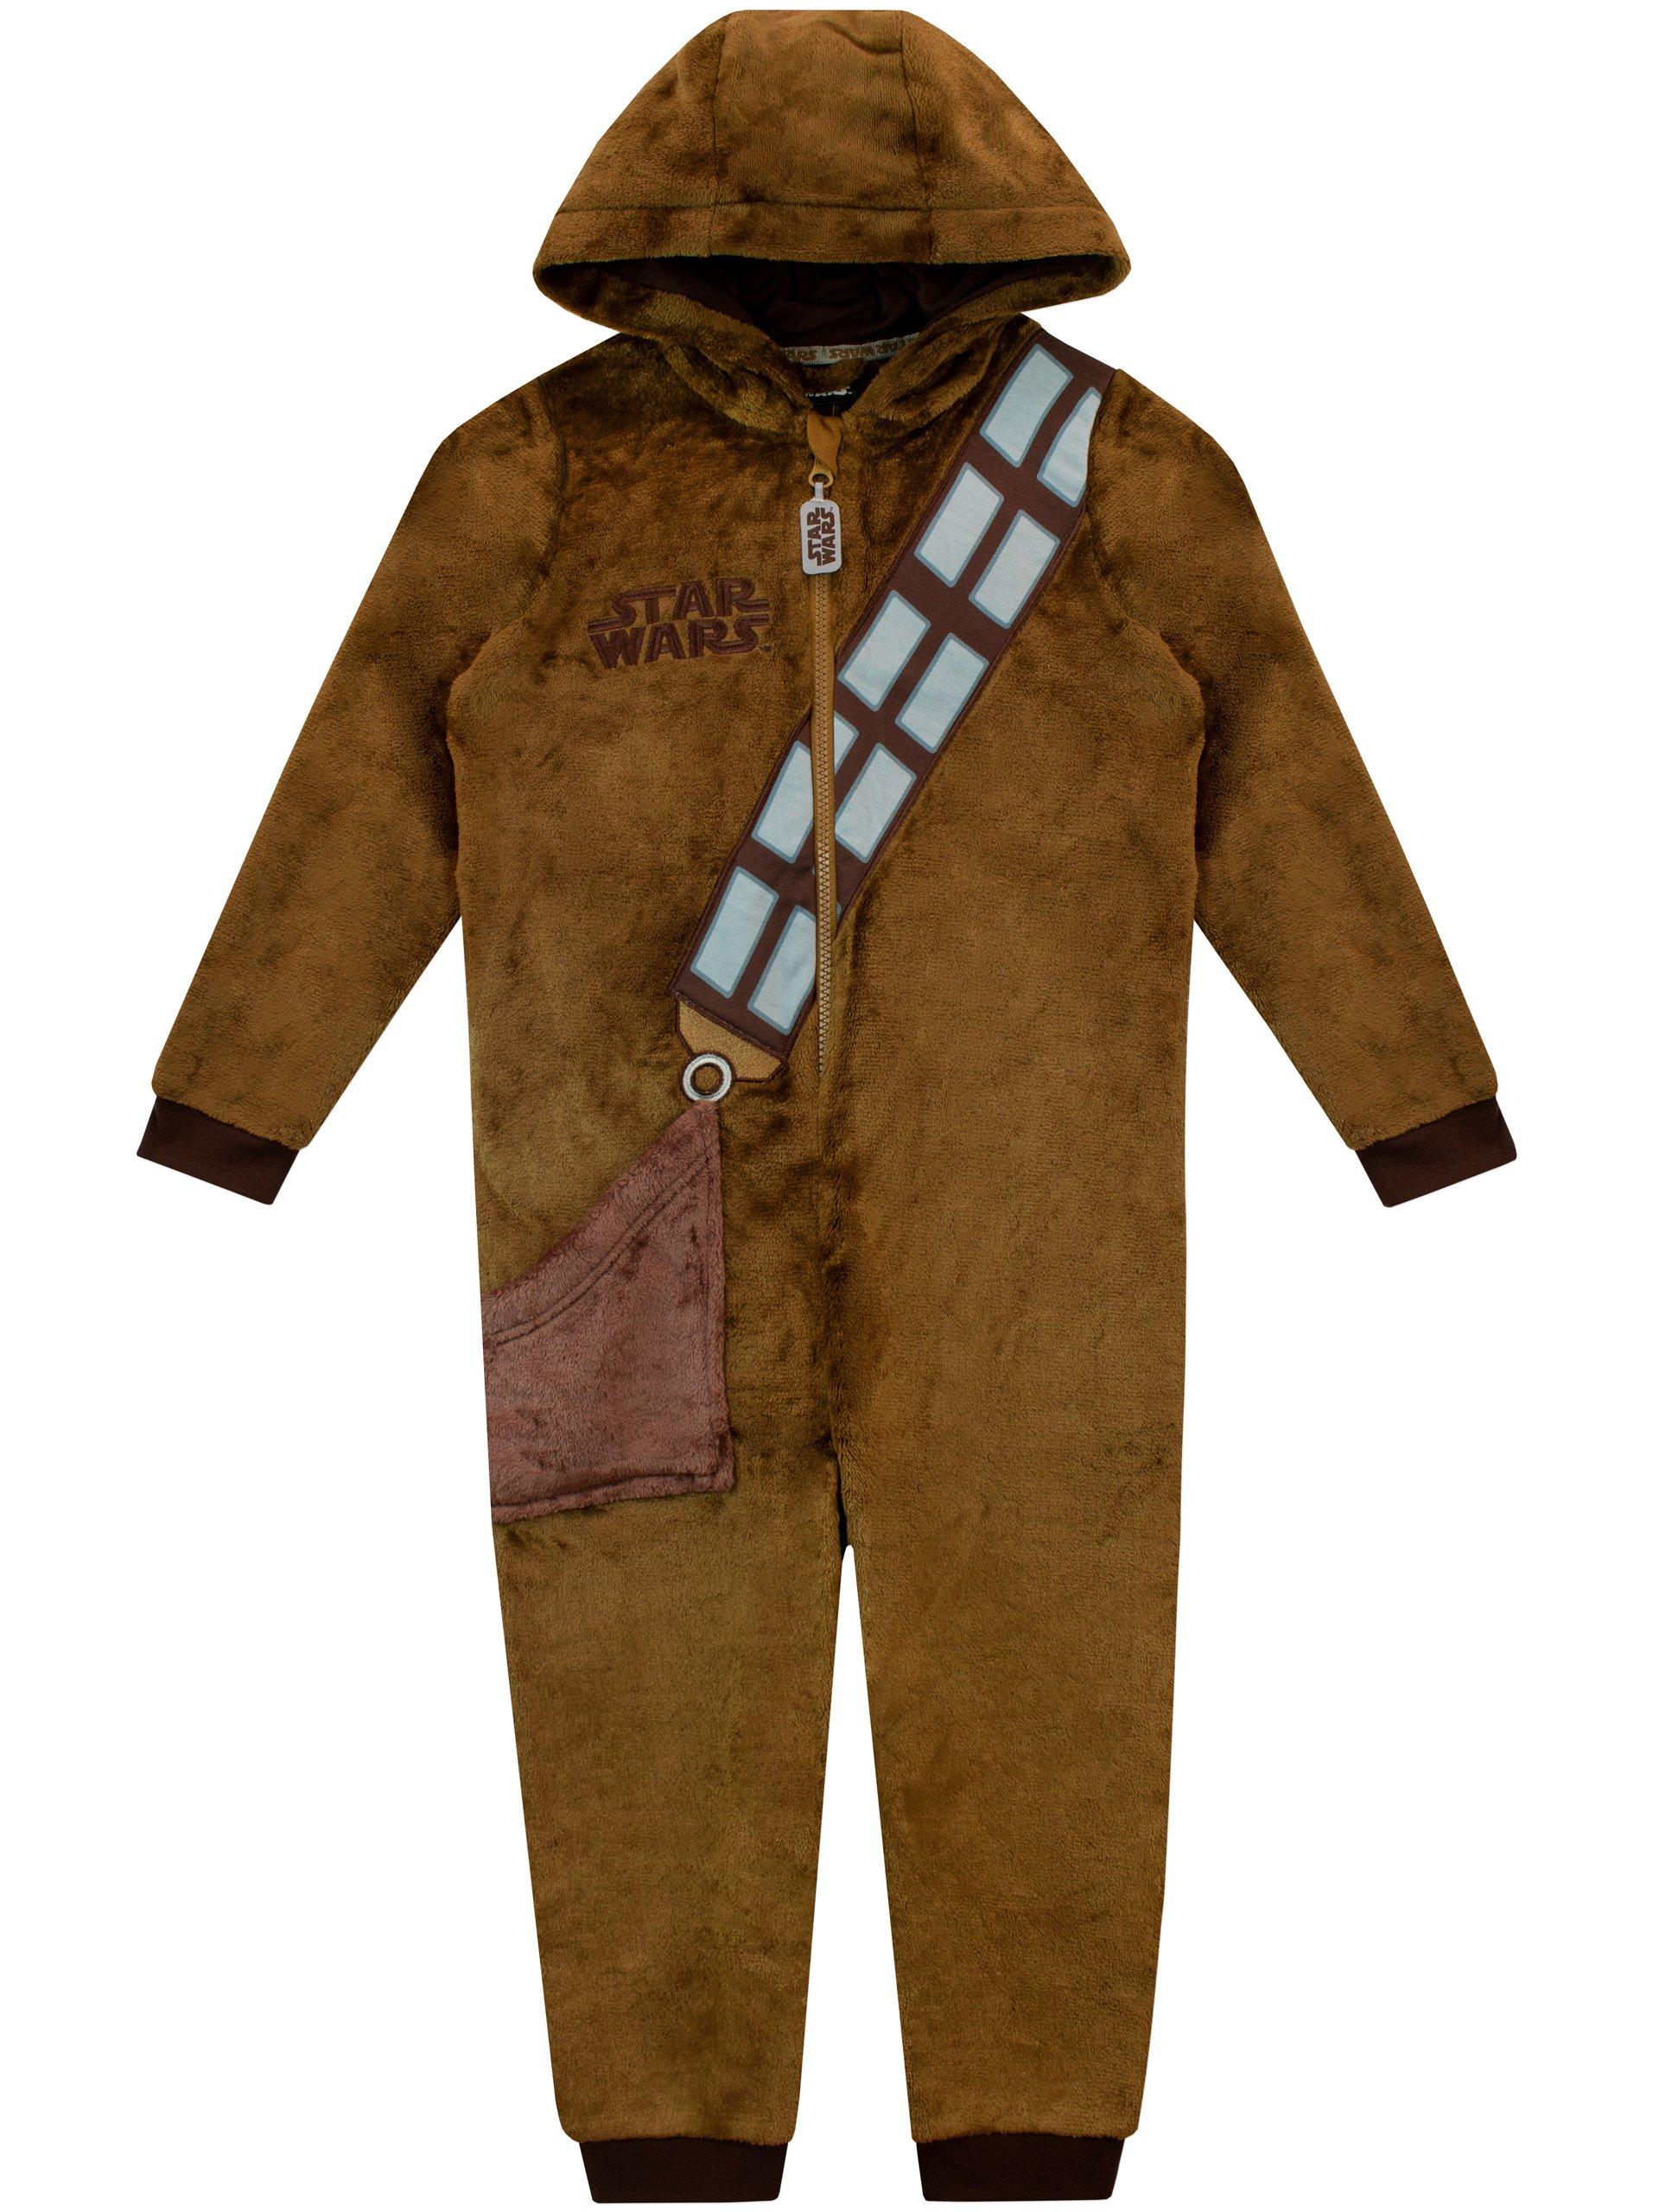 Флисовый комбинезон Chewbacca All In One Star Wars, коричневый маска чубакки 9180